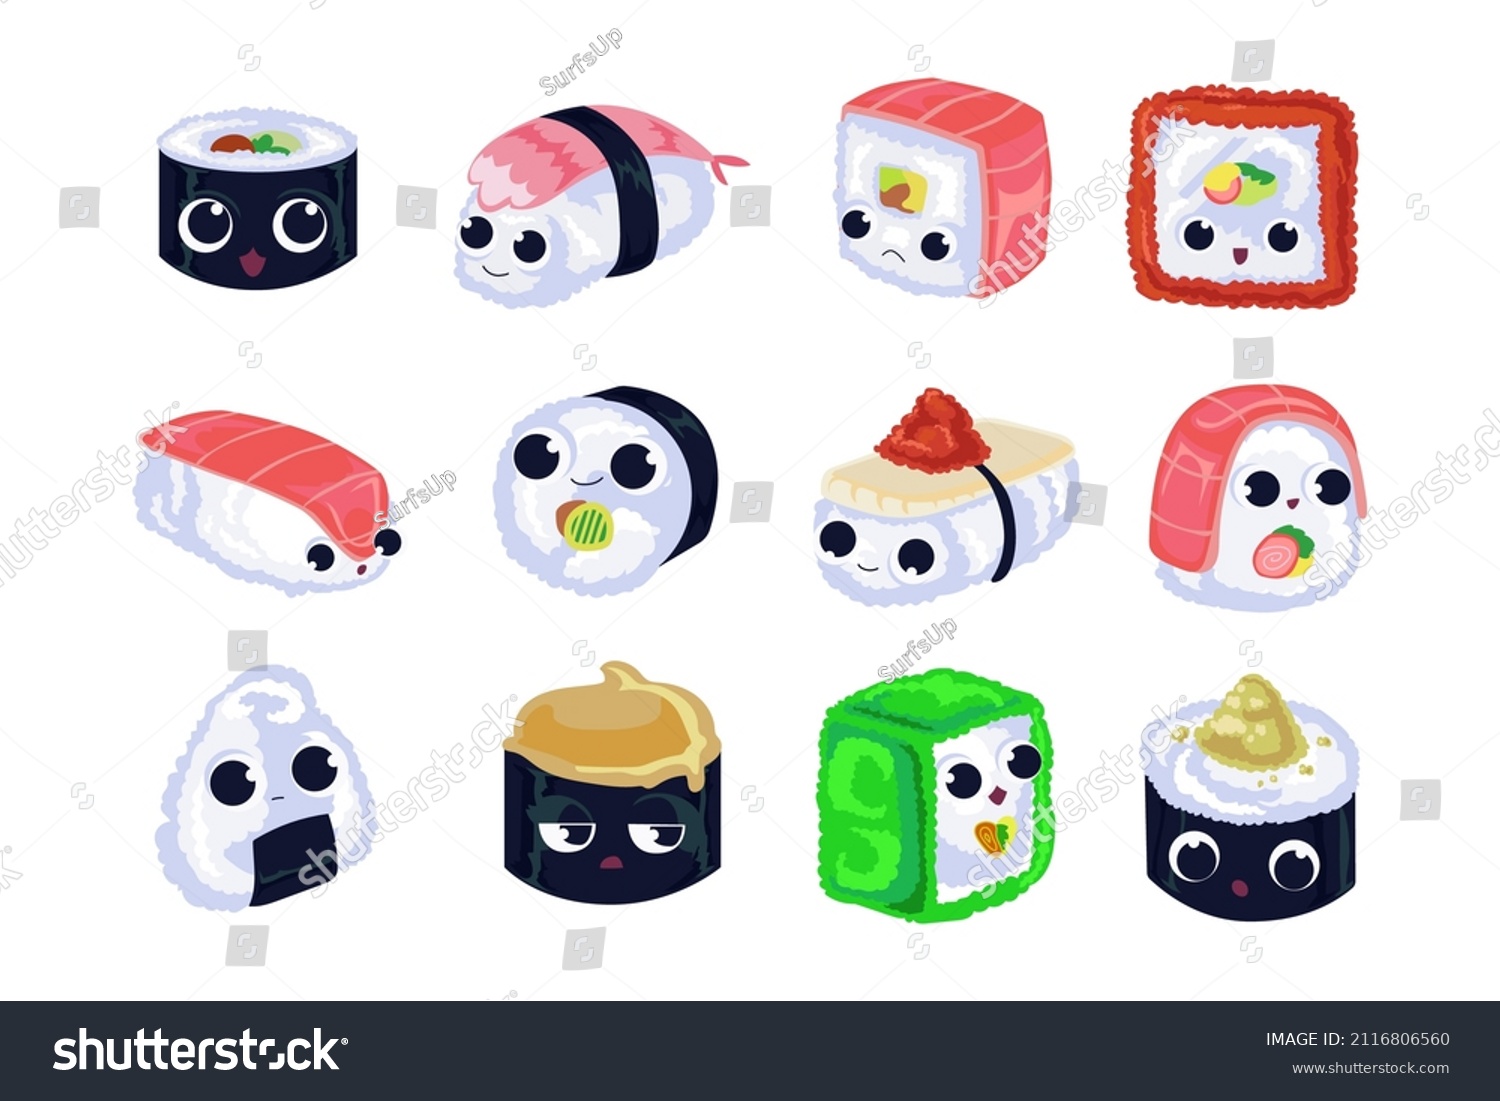 Kawaii Sushi Characters Faces Cartoon Illustration Stock Vector ...